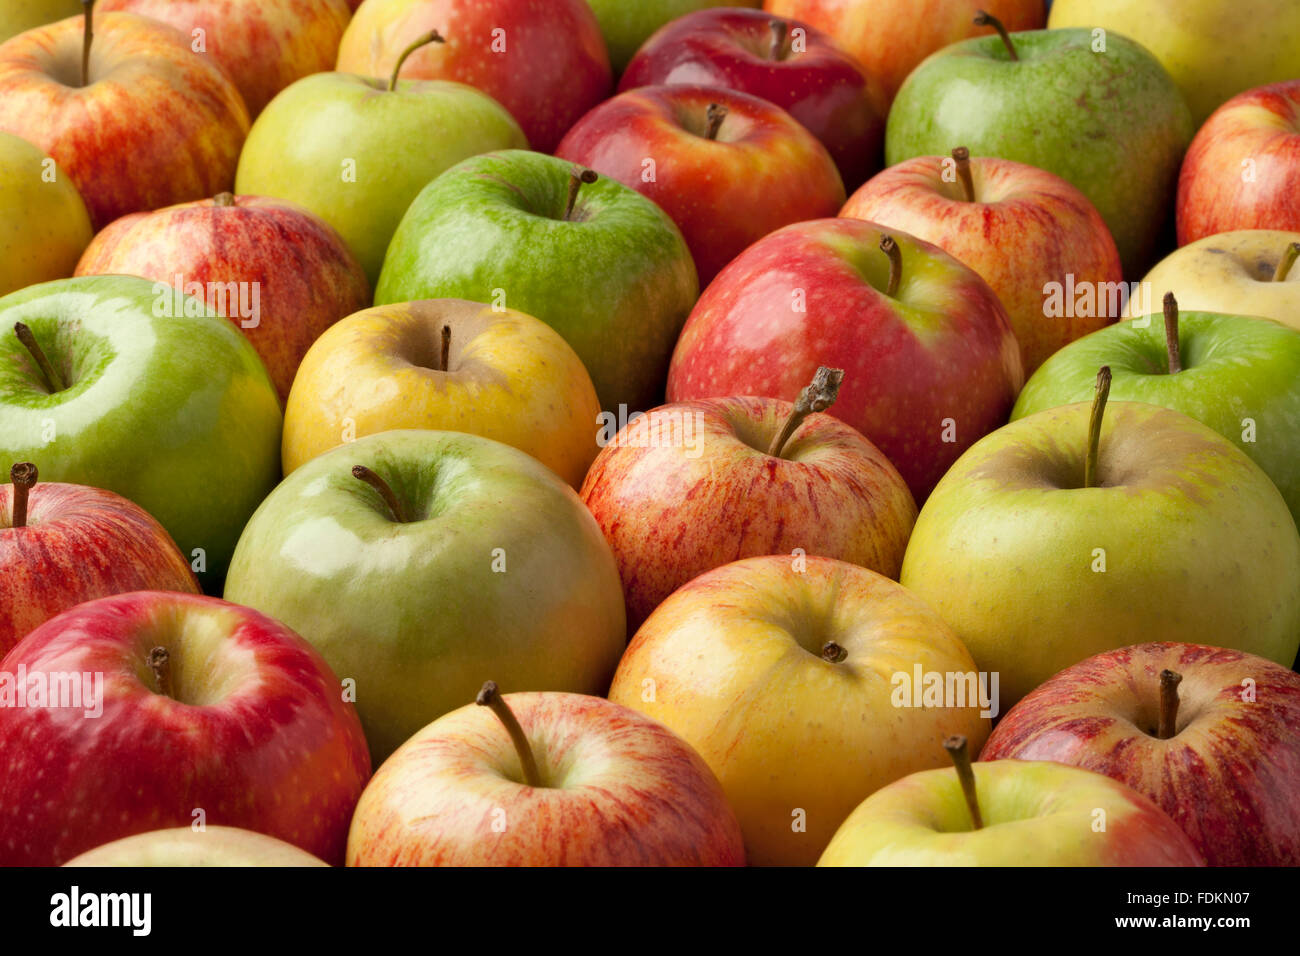 Los diferentes tipos de manzanas frescas full frame Foto de stock